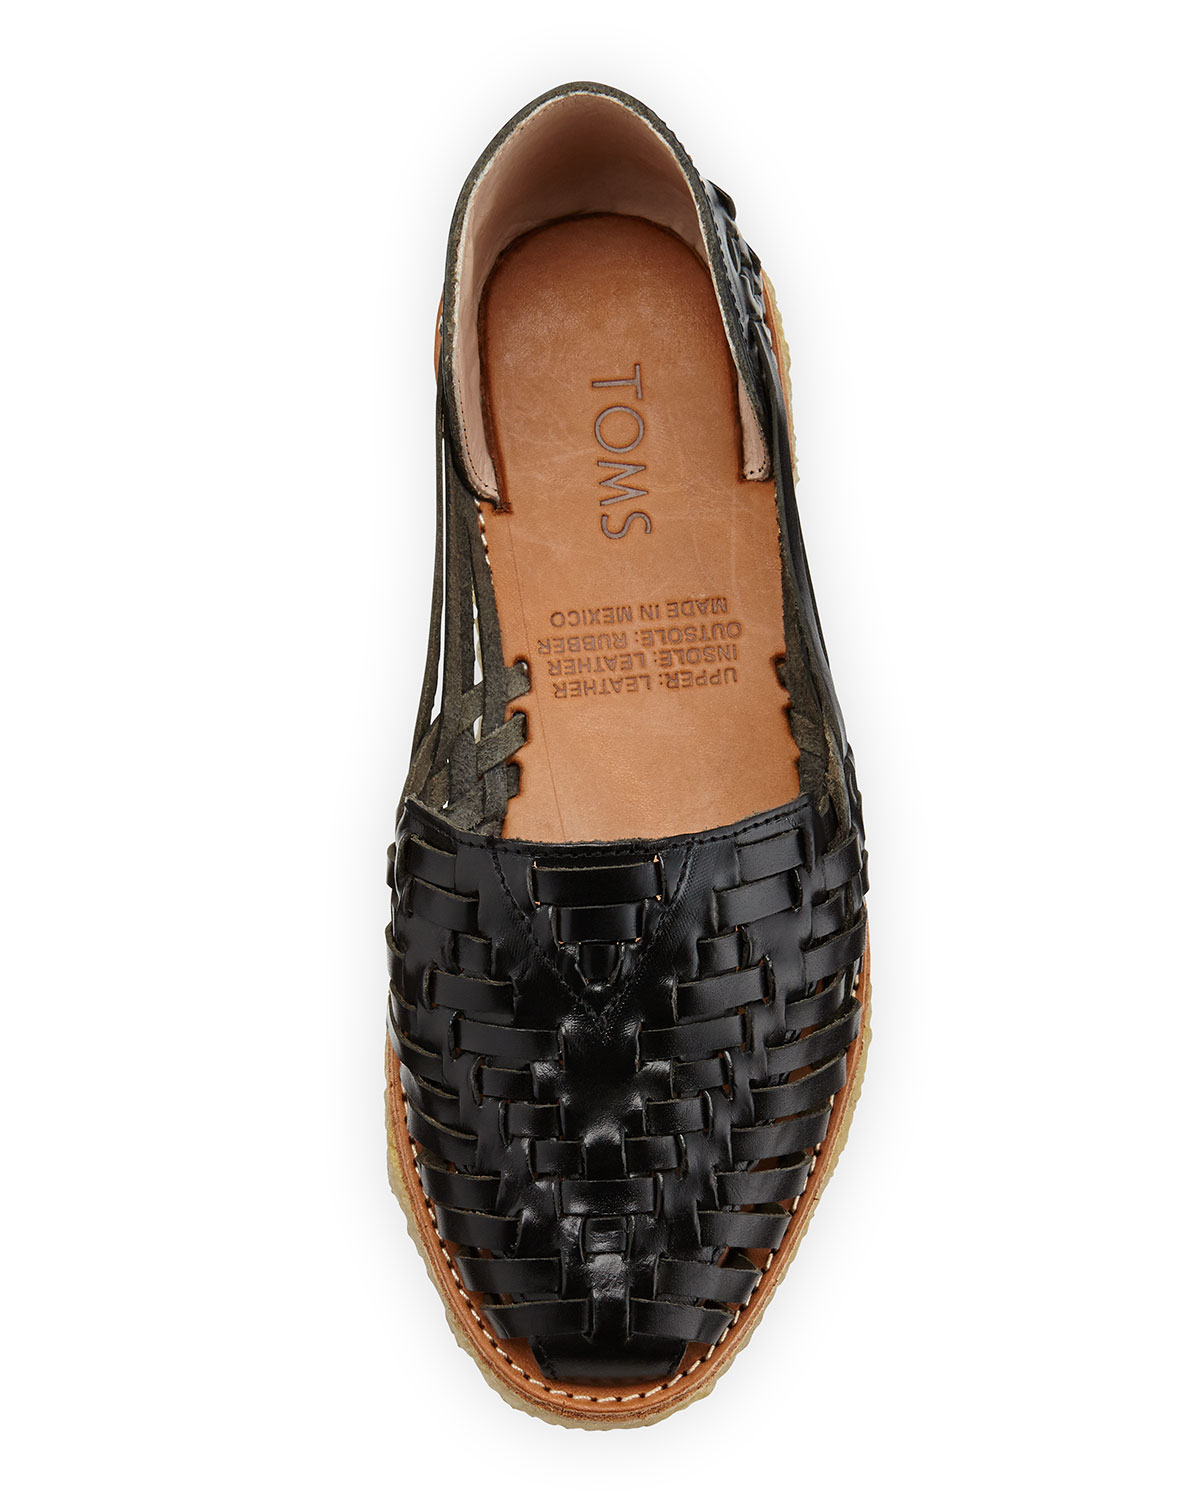 Lyst - Toms Leather Huarache Flat Sandal in Black